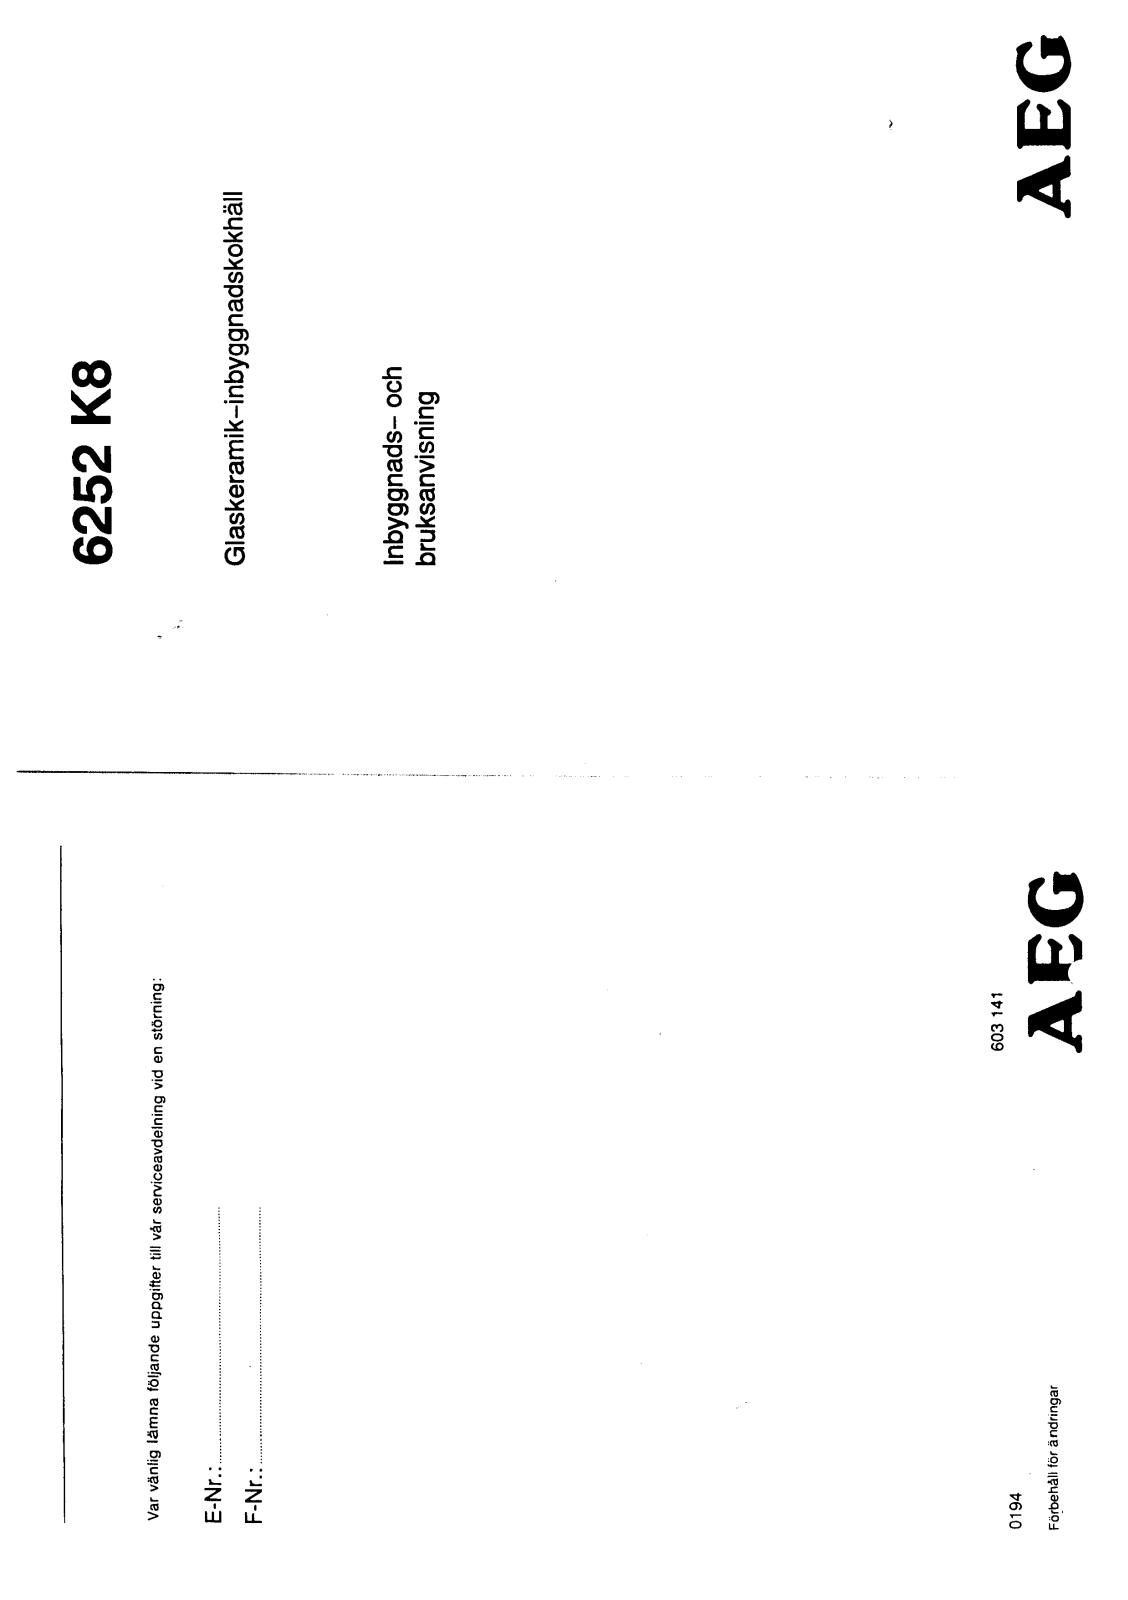 AEG 6252K8-WN/EURO, 6252K8-BN, 6252K8-MN, 6252K8-DN/EURO Manual